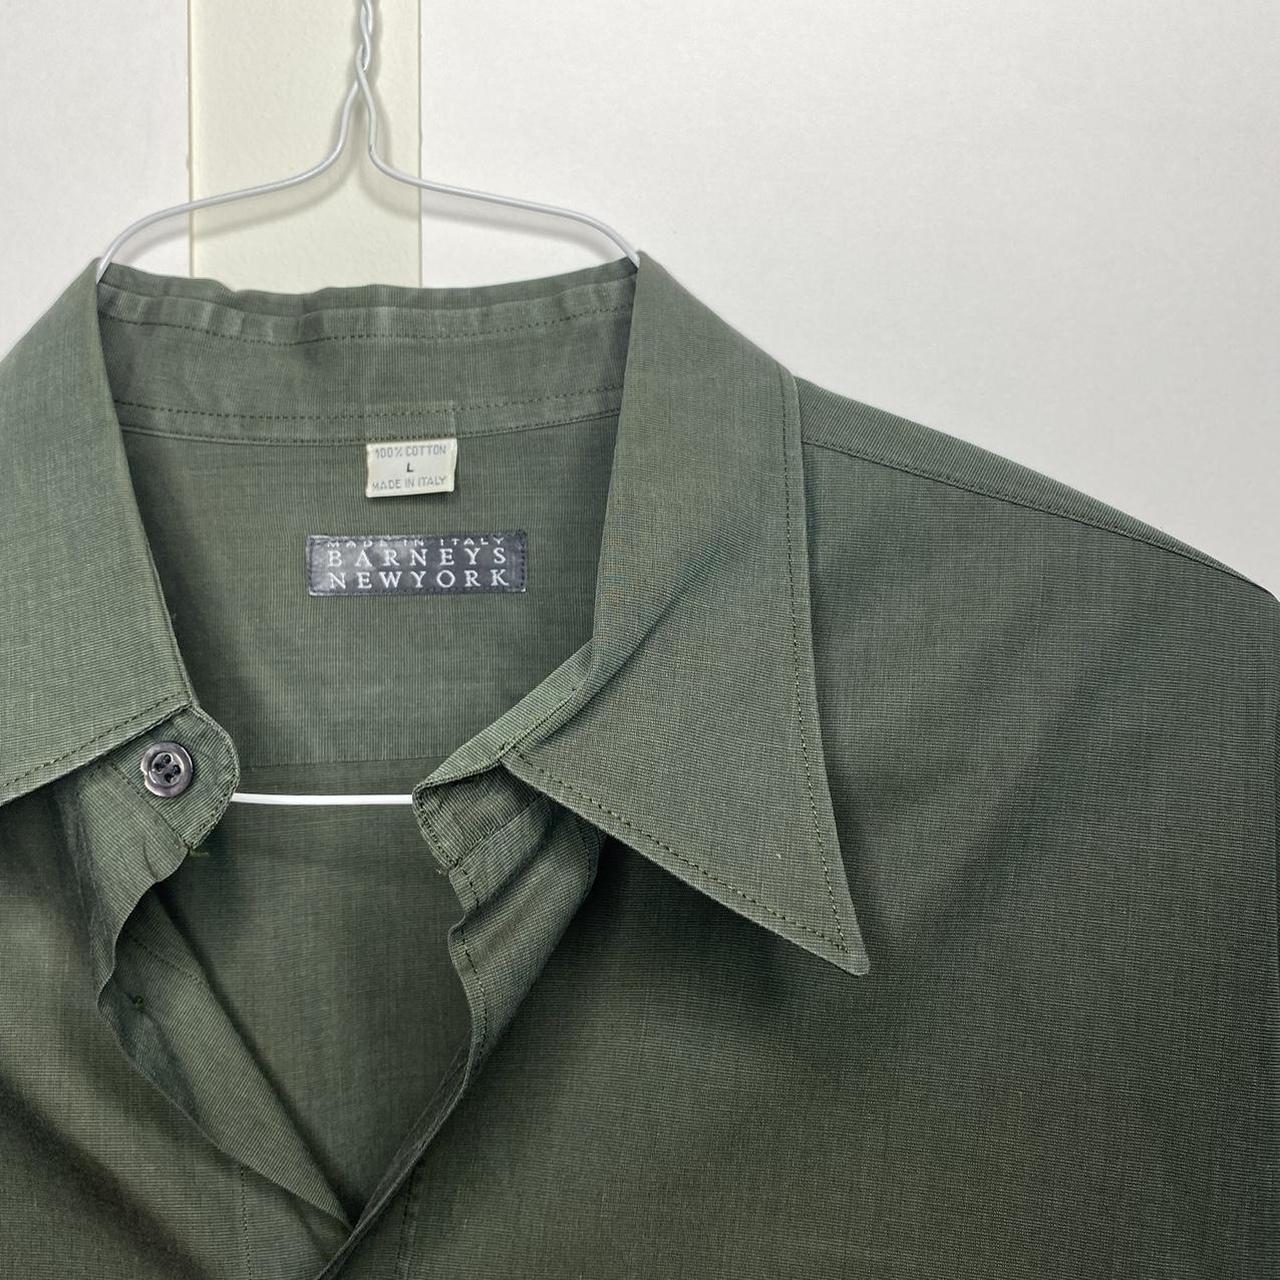 Barney's Men's Khaki and Green Shirt (6)